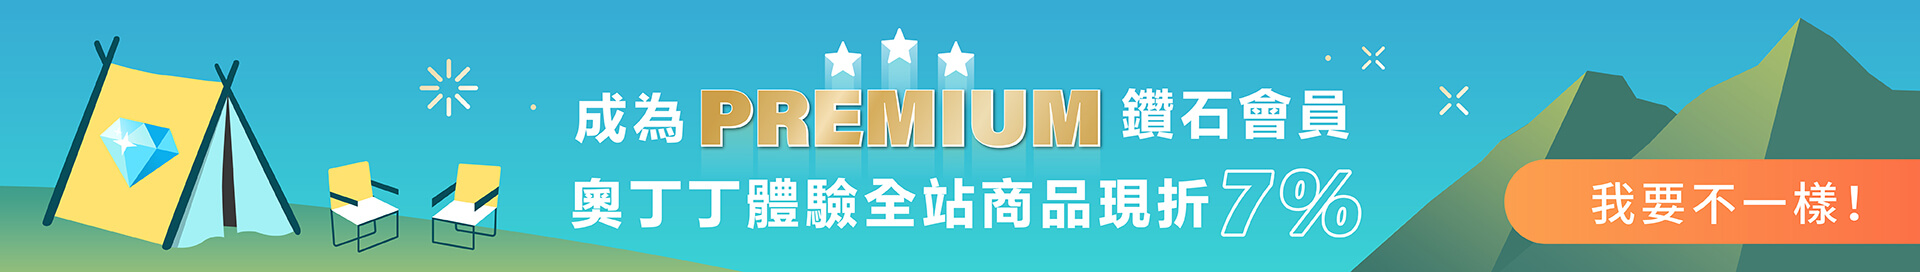 Premium2 萬用banner2